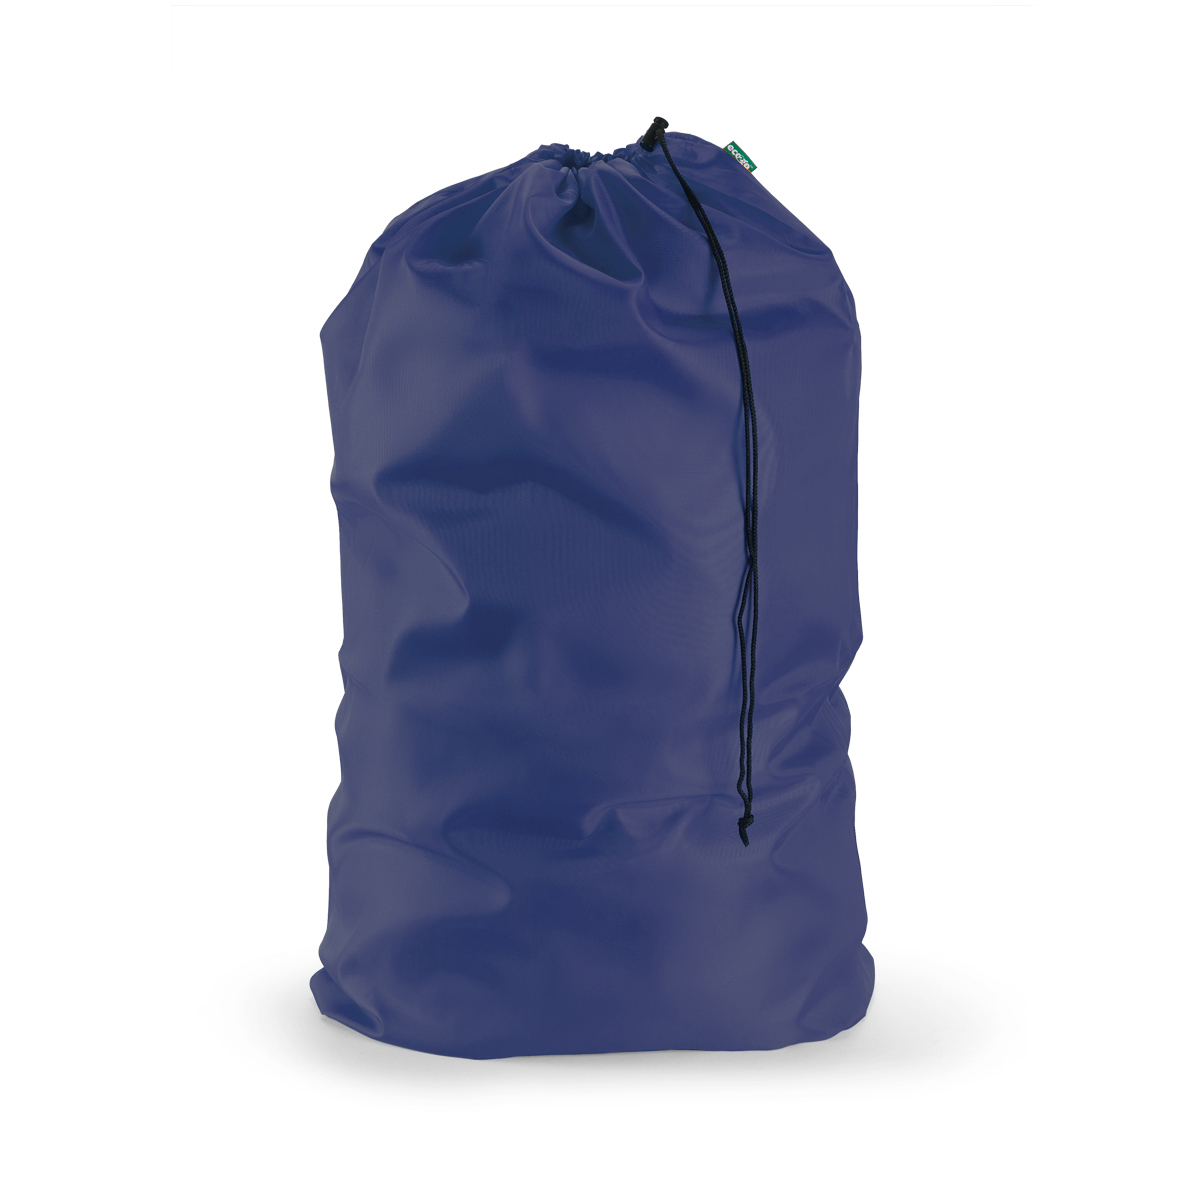 IKEA LuLaRoe Storage Bag Dark Blue Tarp Plastic Laundry Garment